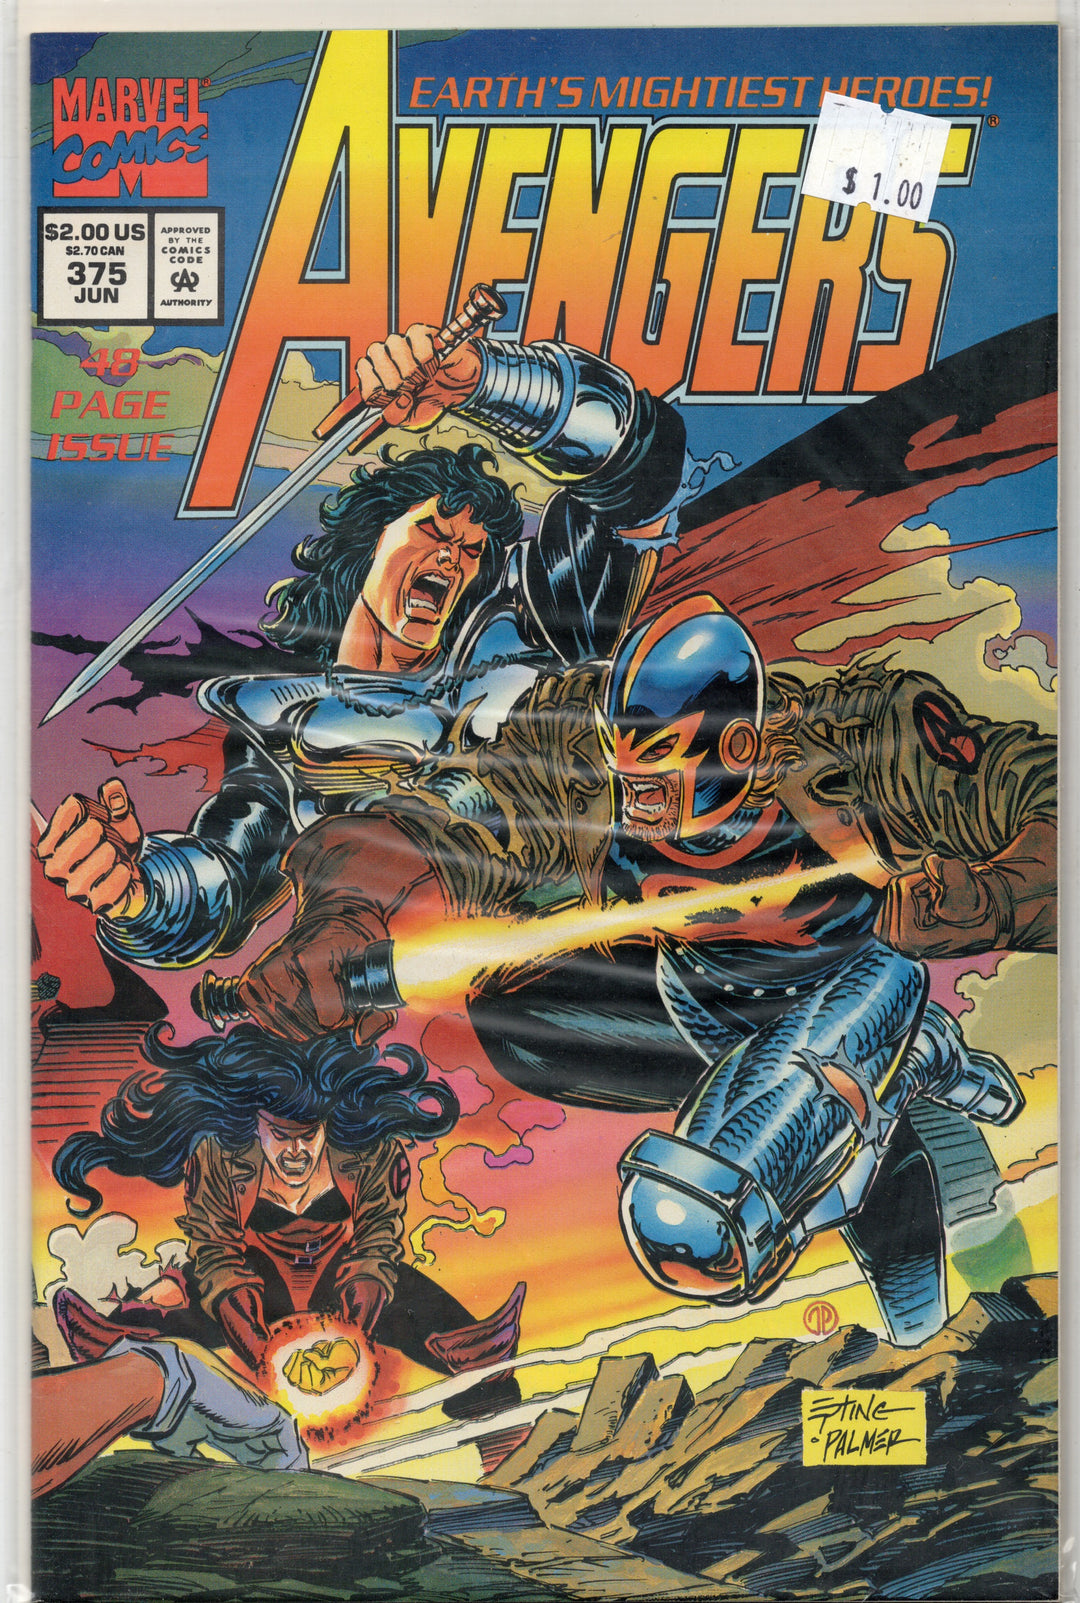 The Avengers #375